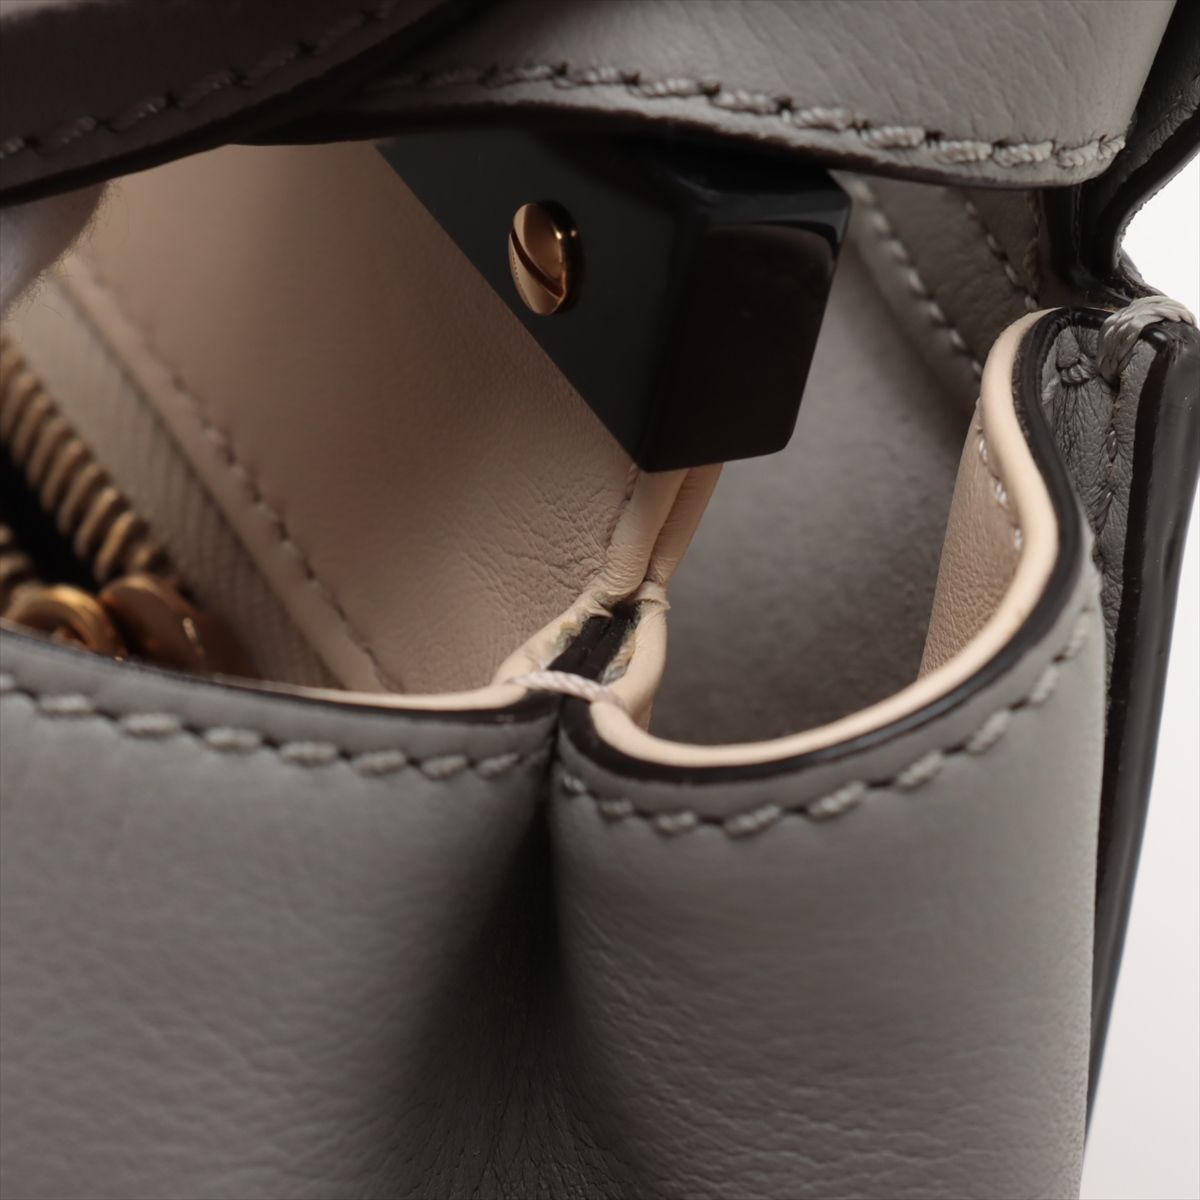 Fendi Peekaboo Regular 2-Way Bag in Grey with Tortoiseshell Accents - Vault 55 | Preowned Designer Handbags